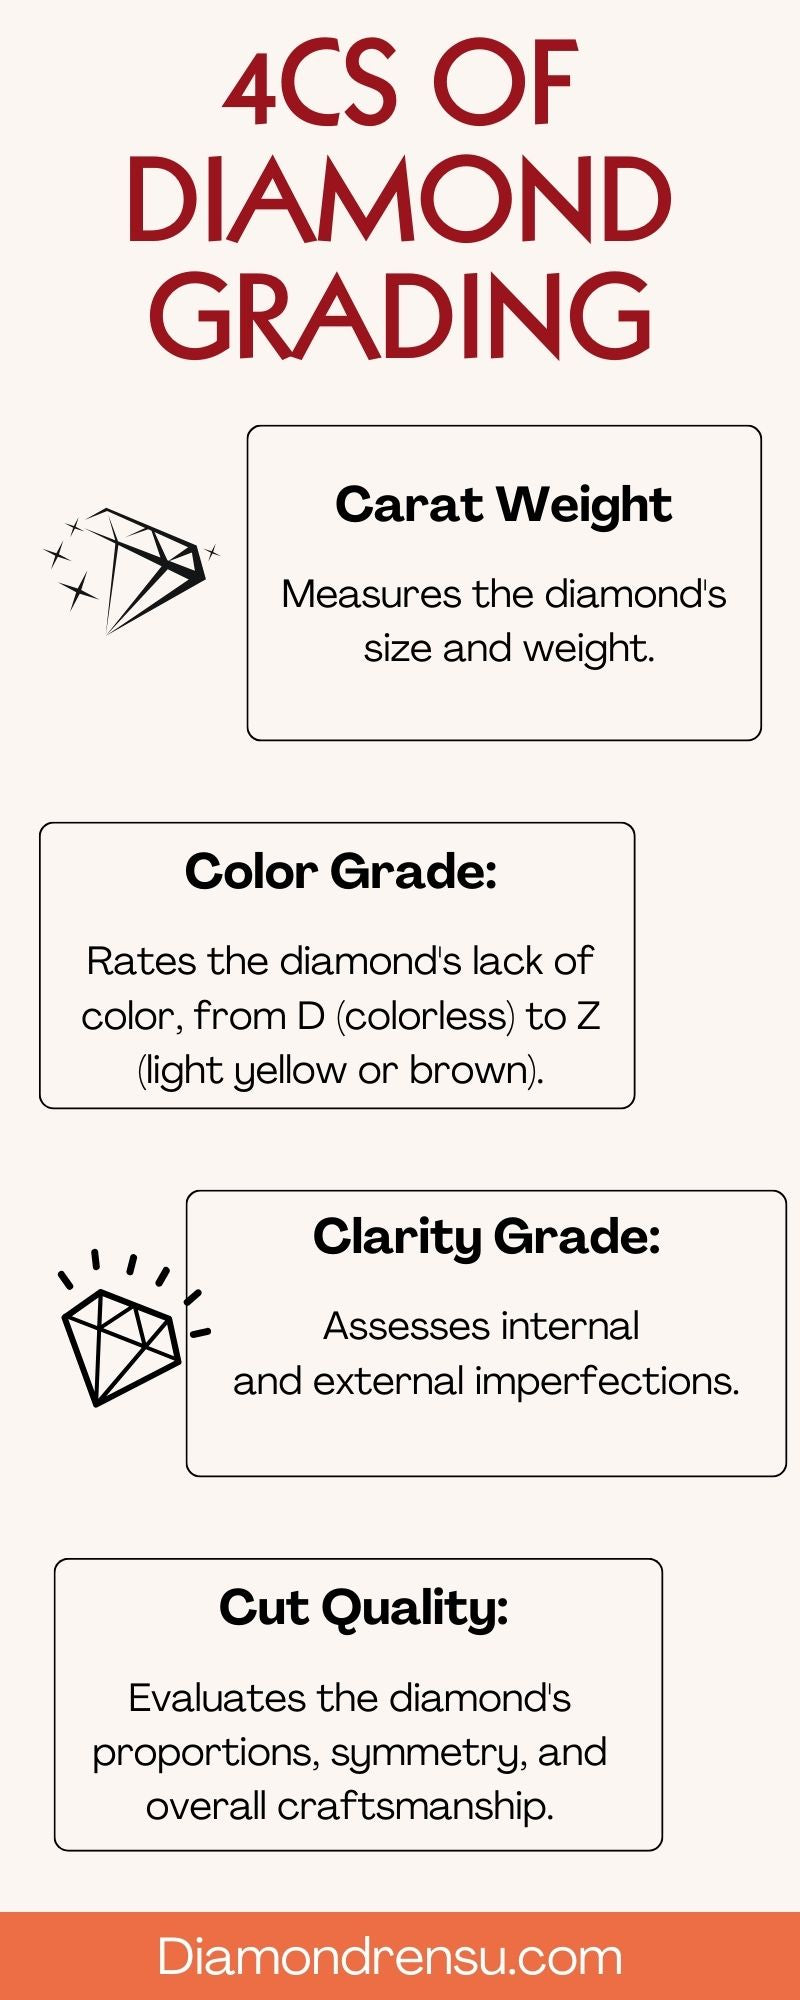 4cs of Dimmond grading infographic